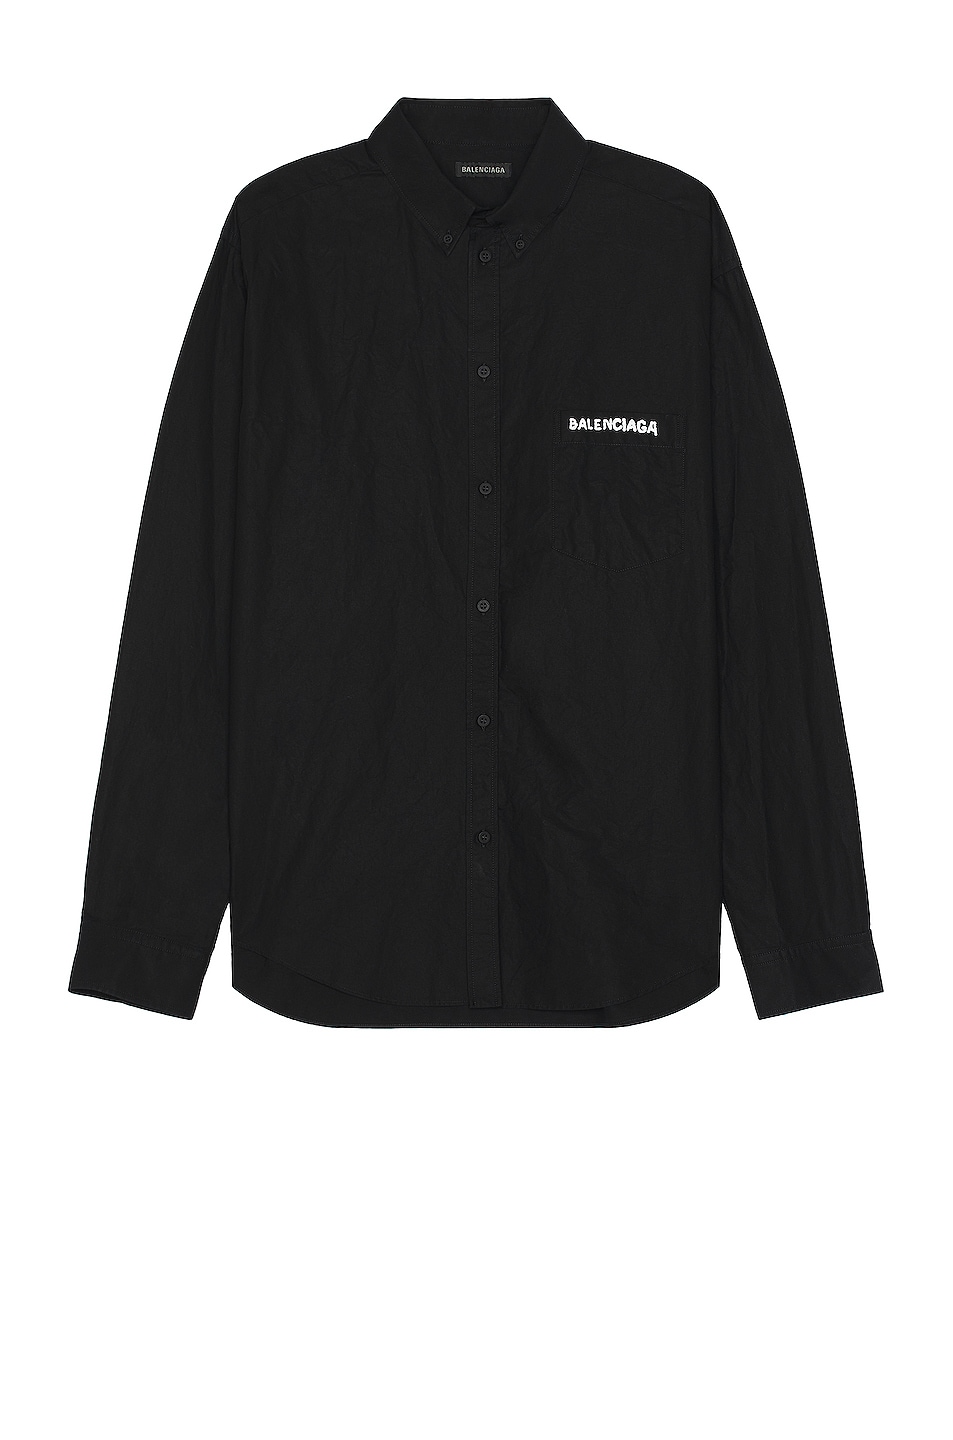 Balenciaga Large Fit Shirt in Black | FWRD